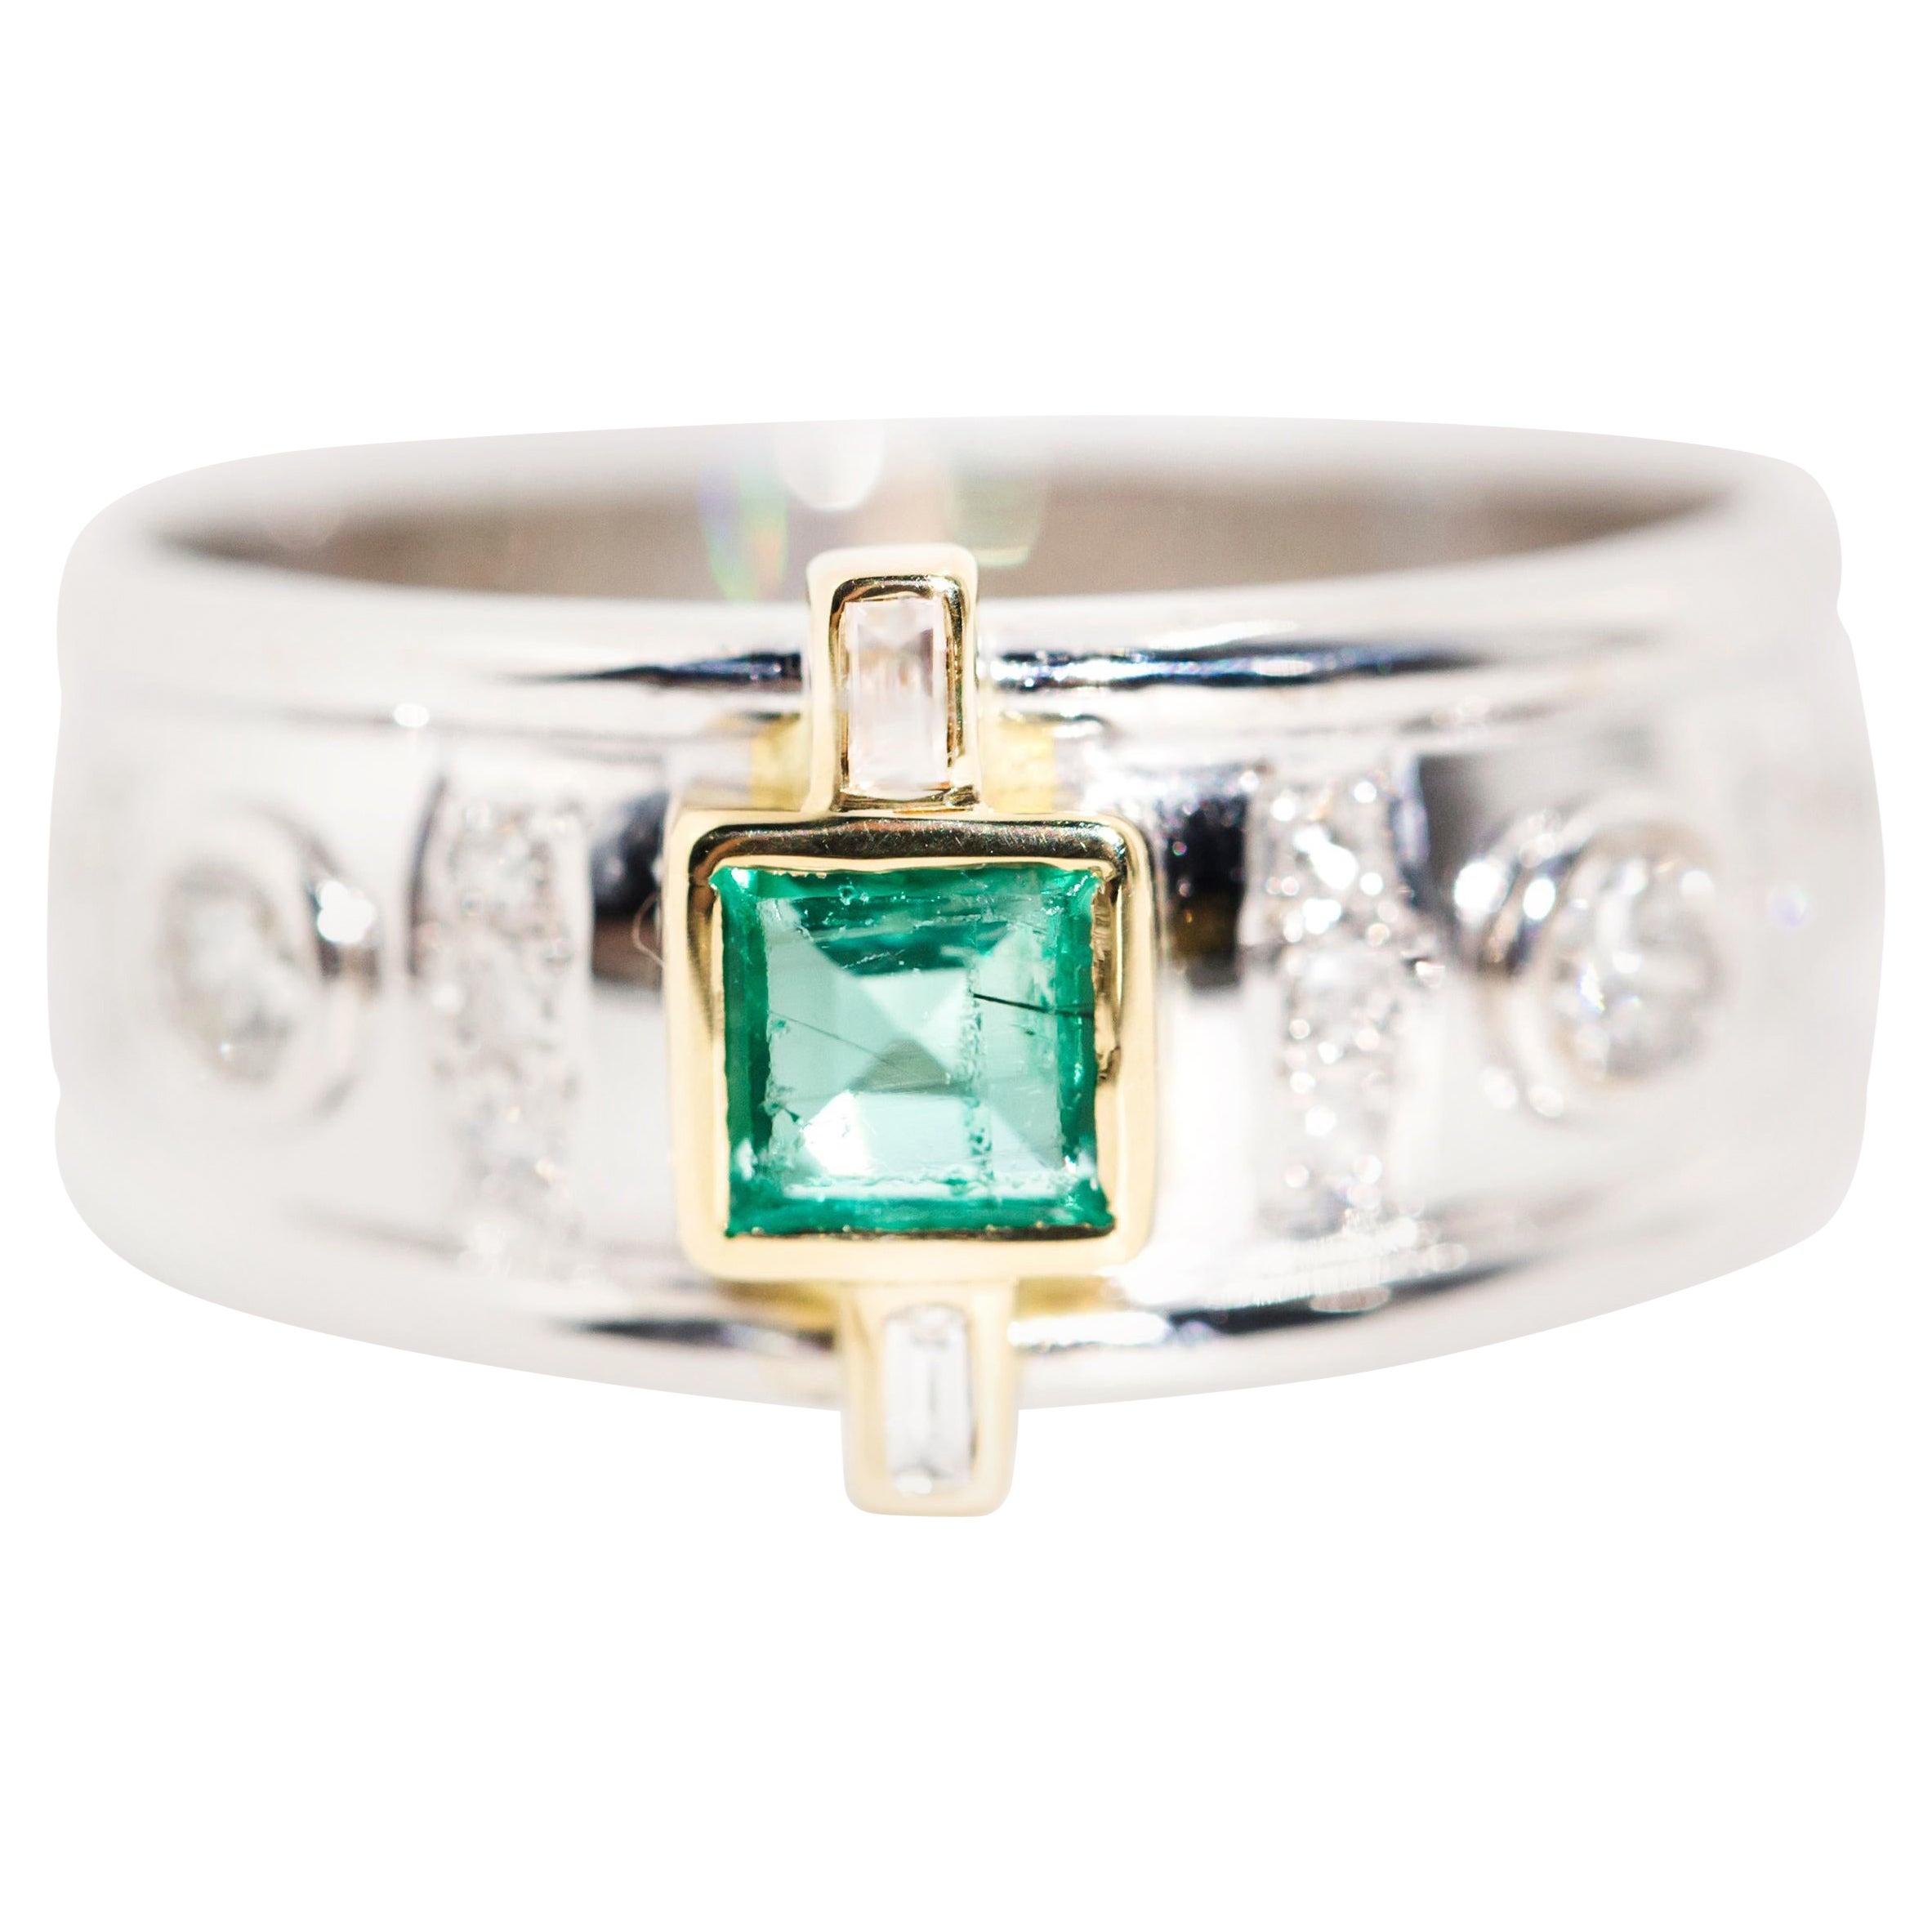 0.45 Carat Green Natural Emerald Diamond Vintage Men's Ring in 9 Carat Gold